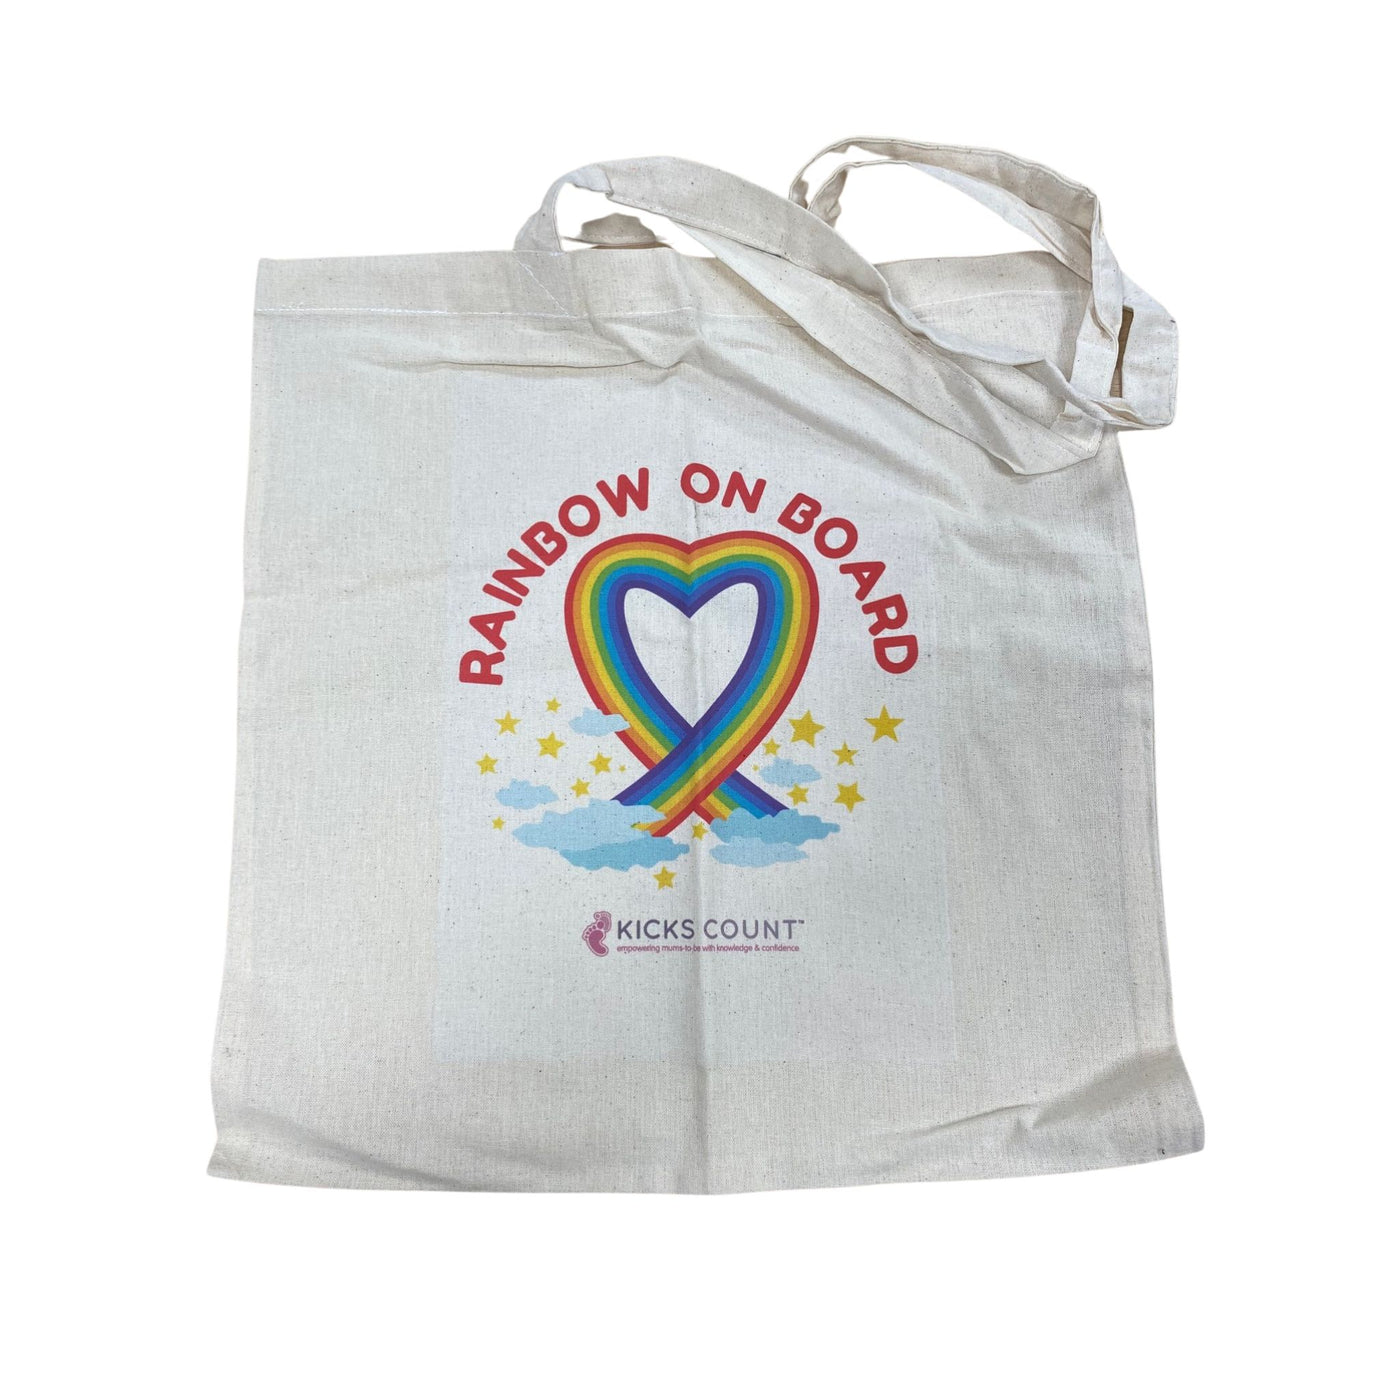 CLEARANCE - Kicks Count ‘Rainbow Baby on Board’ Canvas Bag